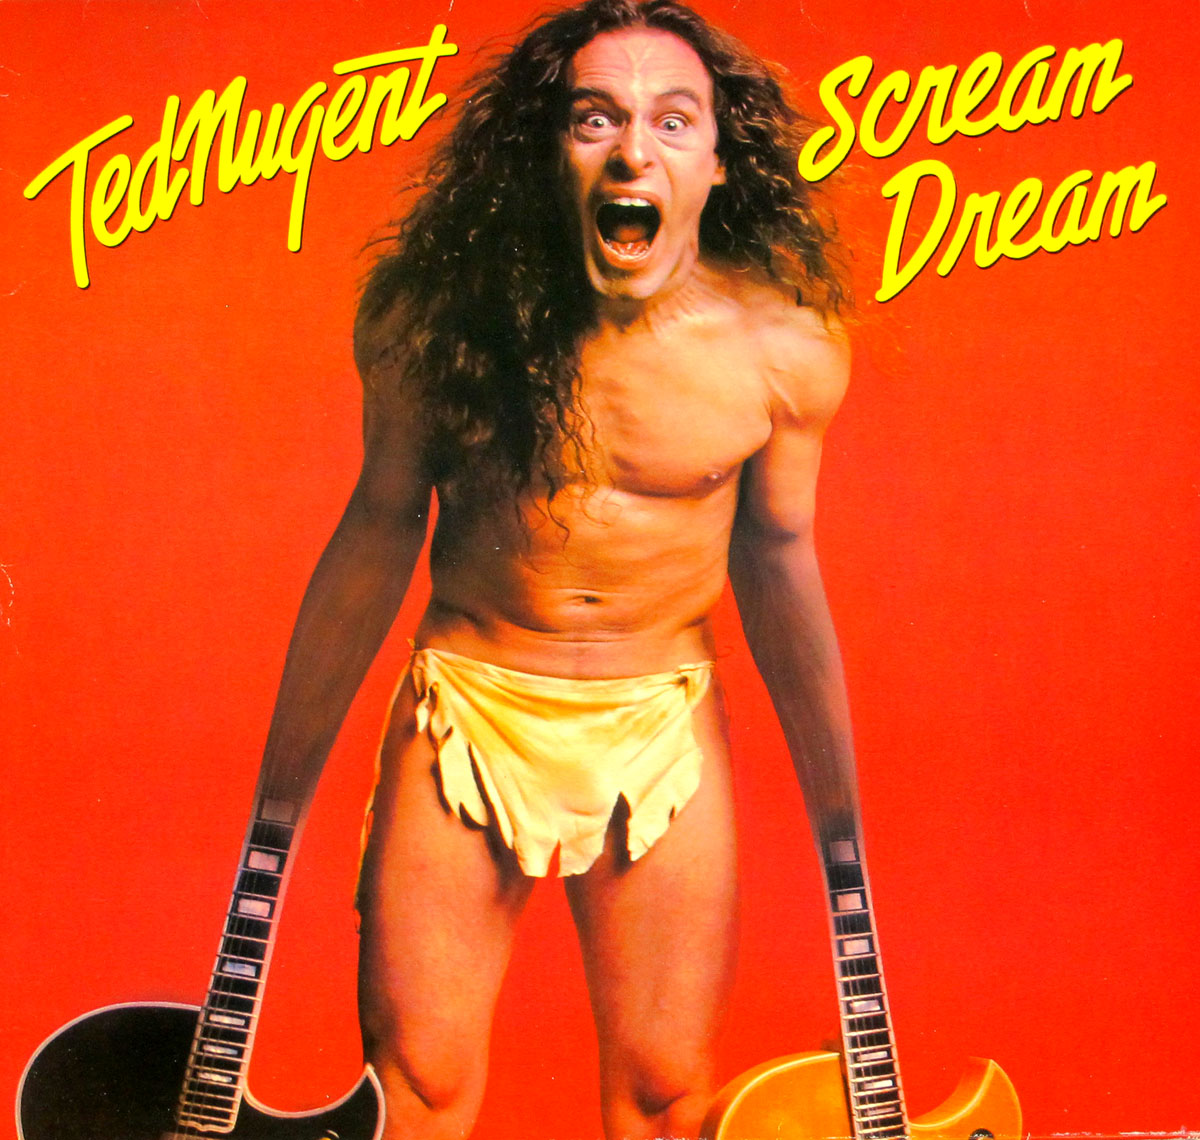 High Resolution Photos of ted nugent scream dream feat wango tango 